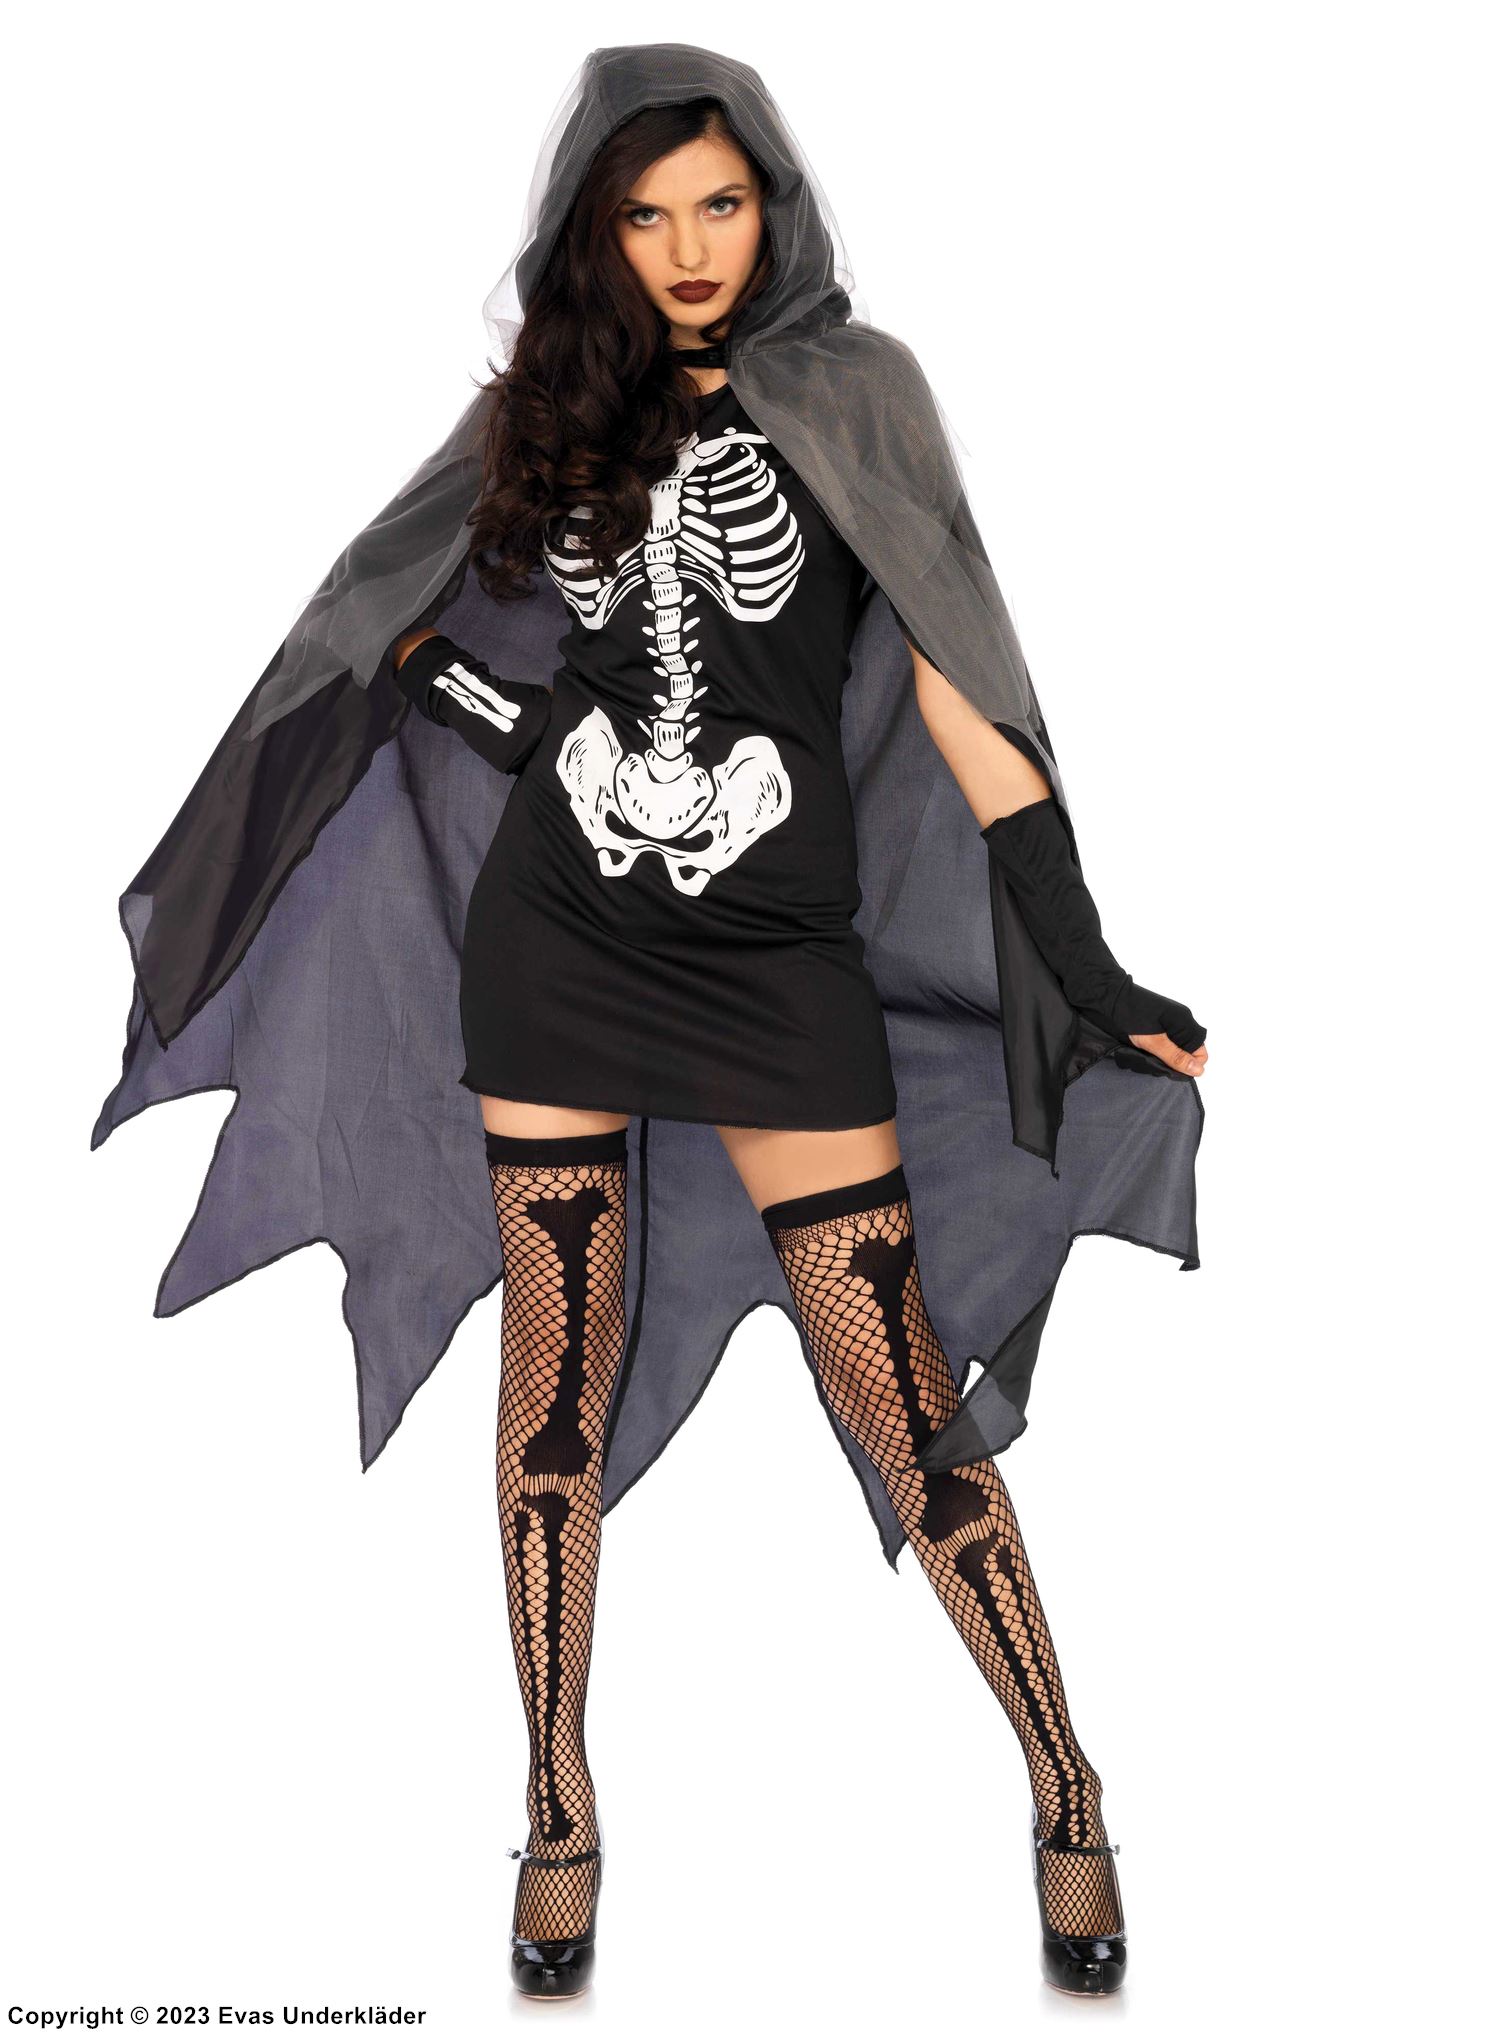 Halloween theme, costume dress, hood, tatters, skeleton